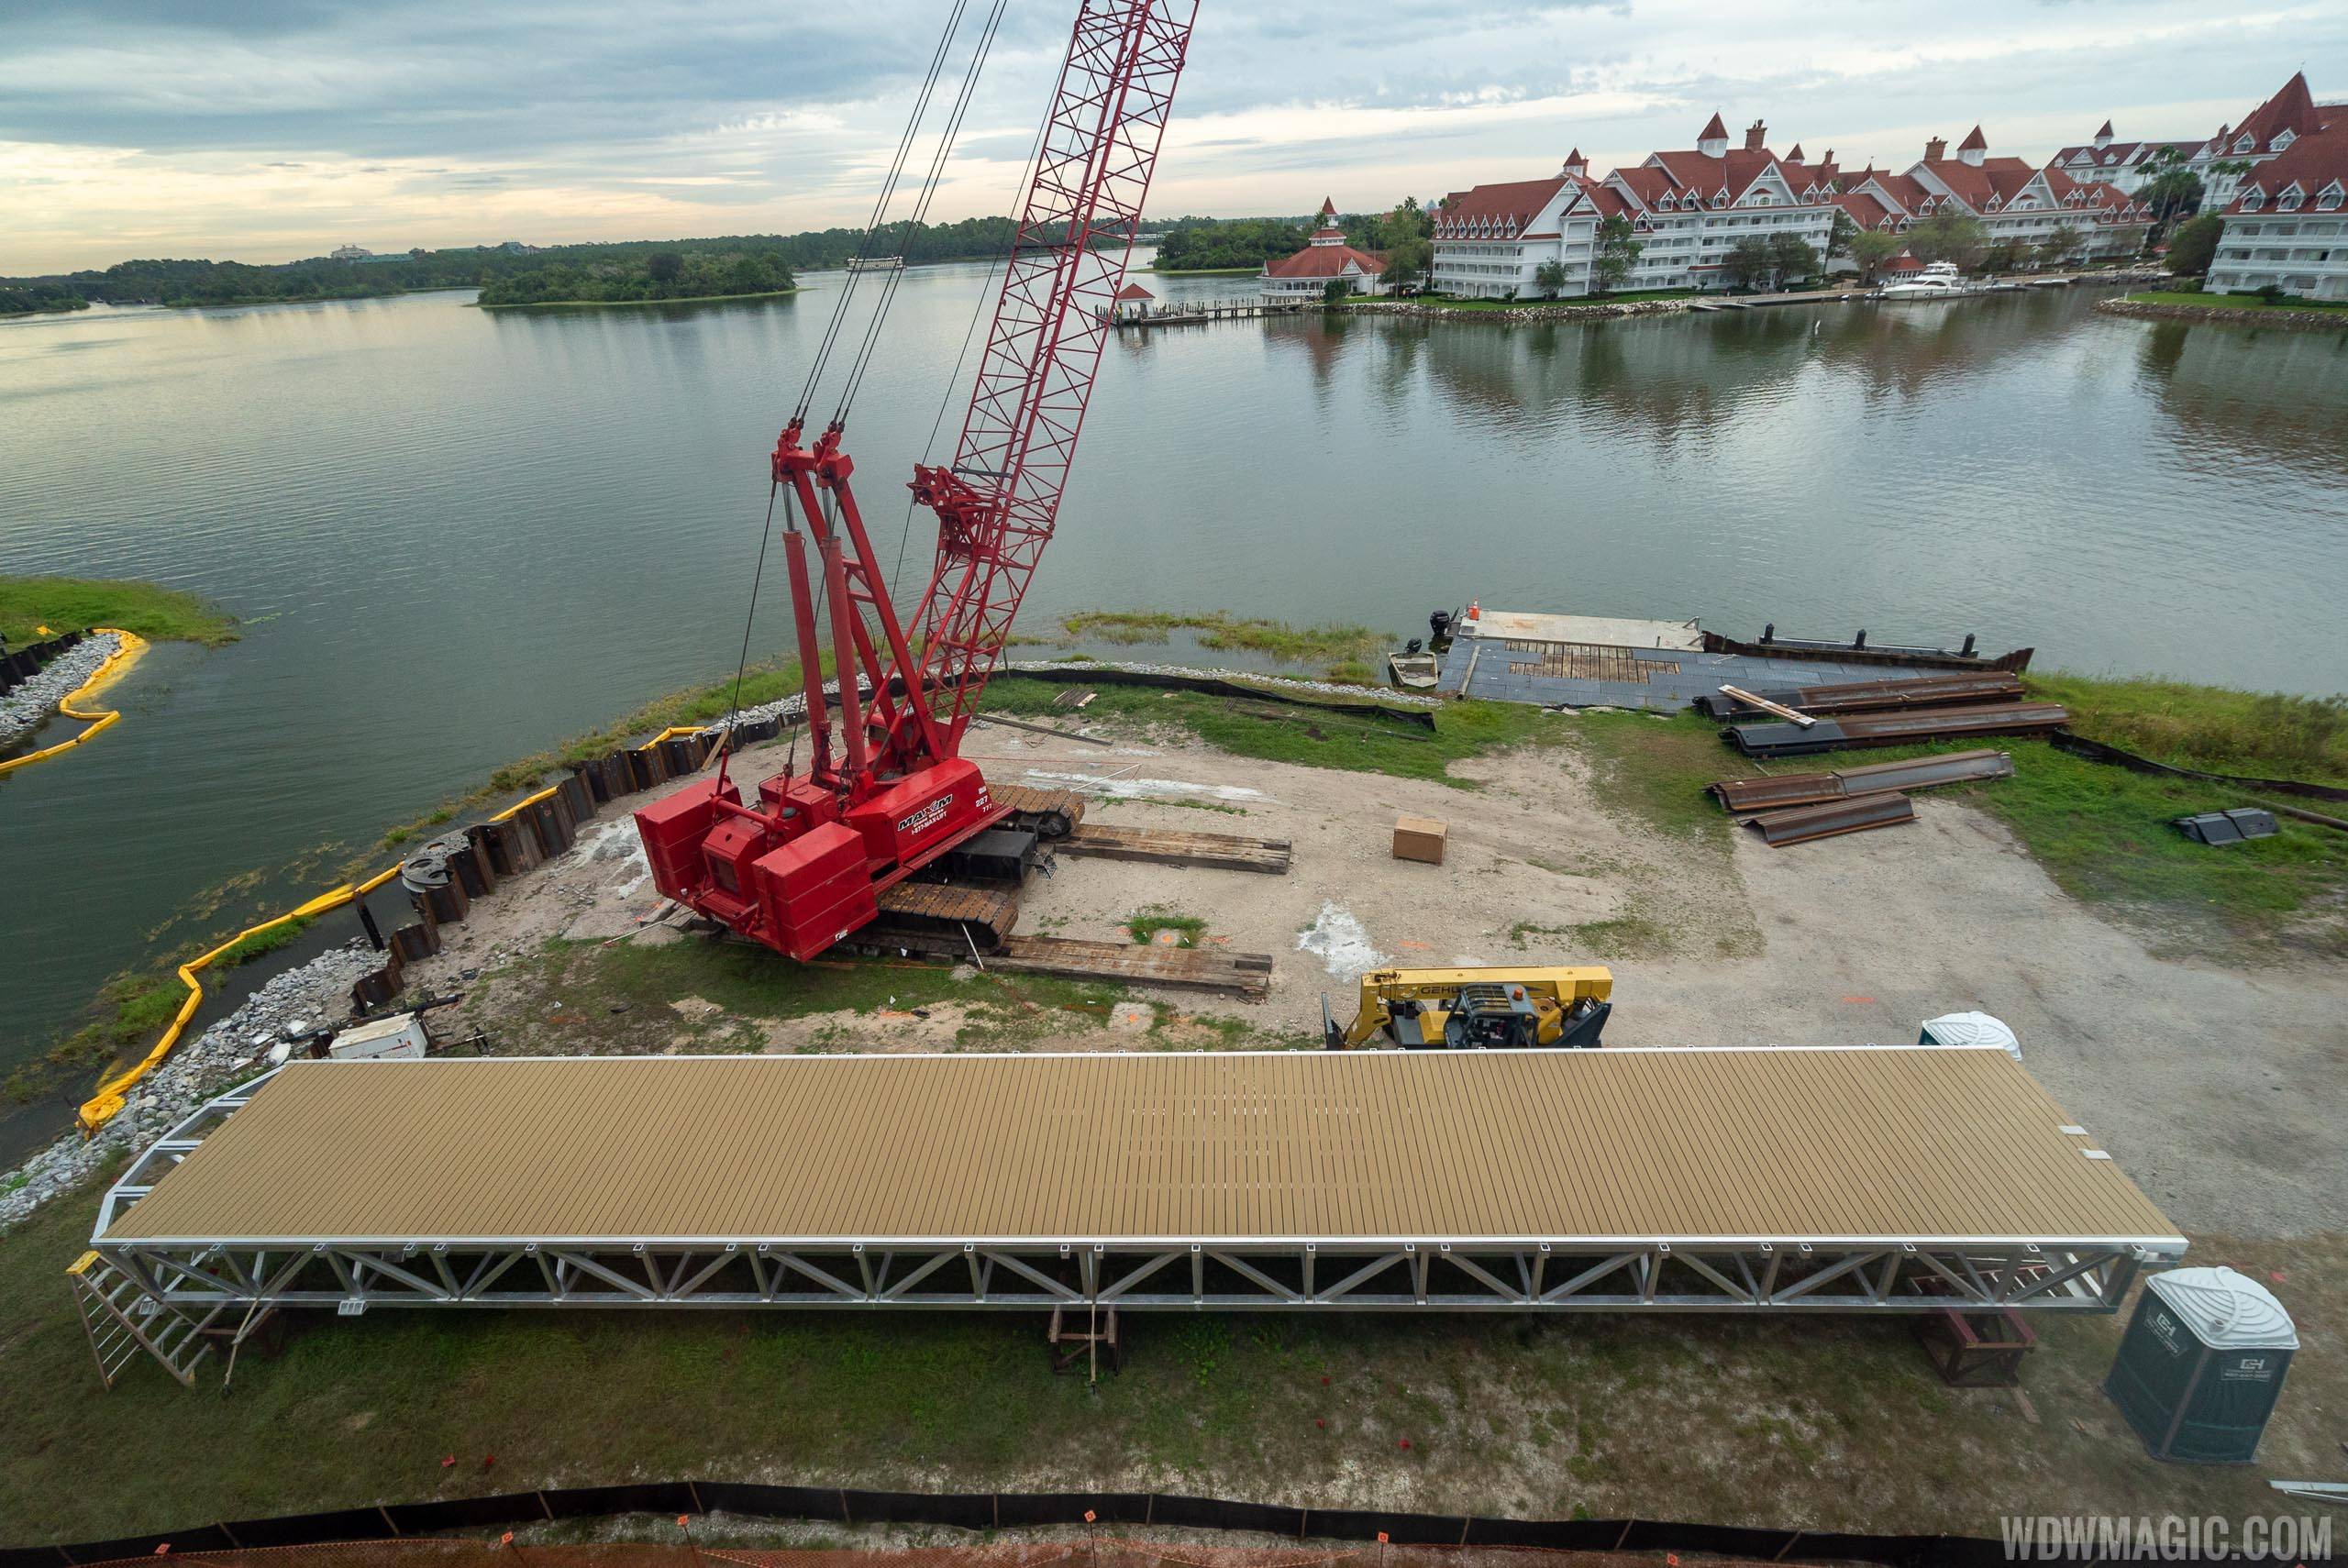 Grand Floridian to Magic Kingdom bridge construction - October 2019